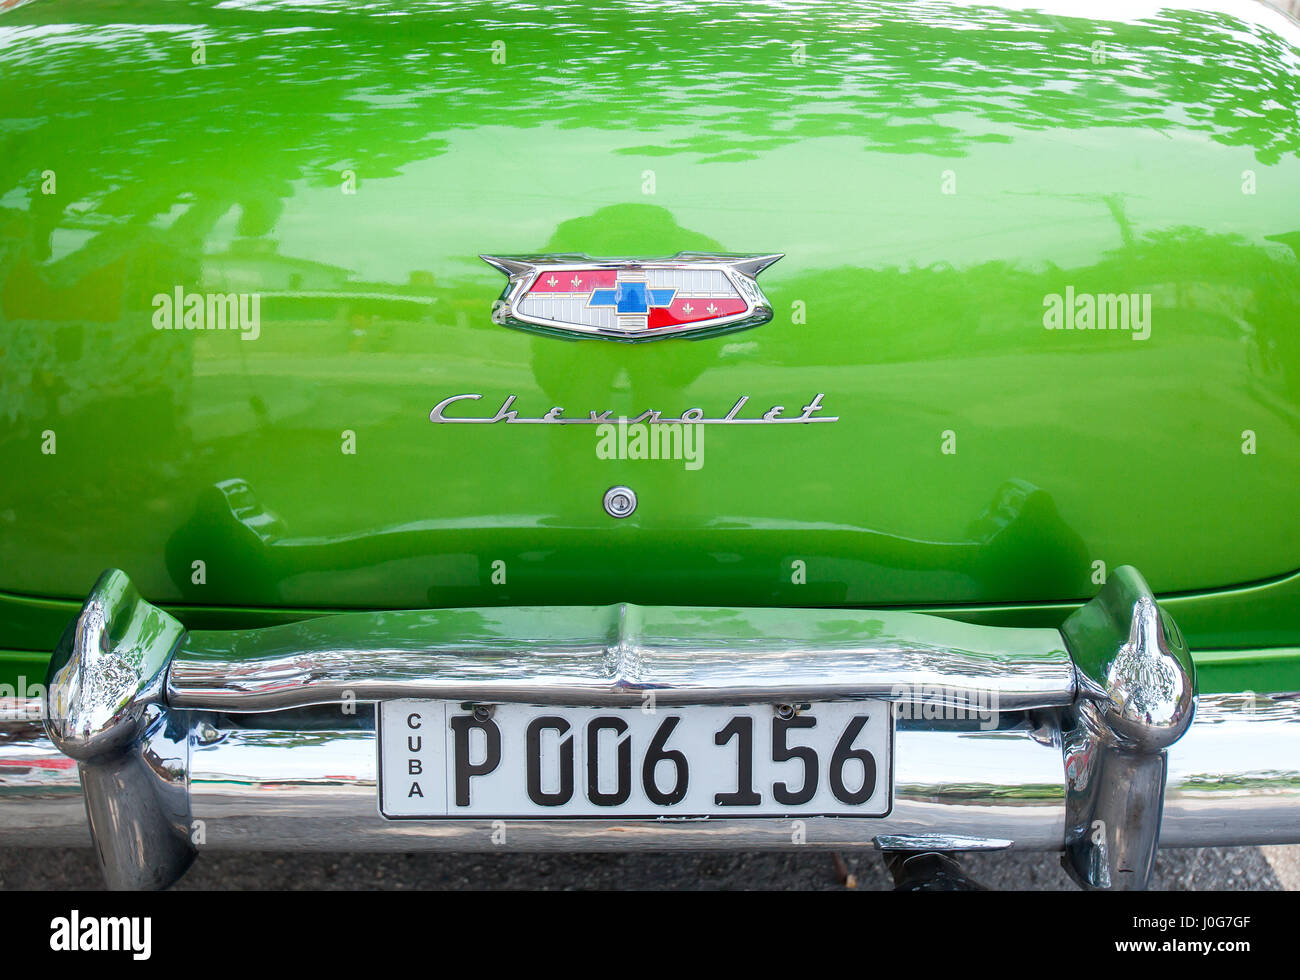 Green classic American car, Cuba Stock Photo